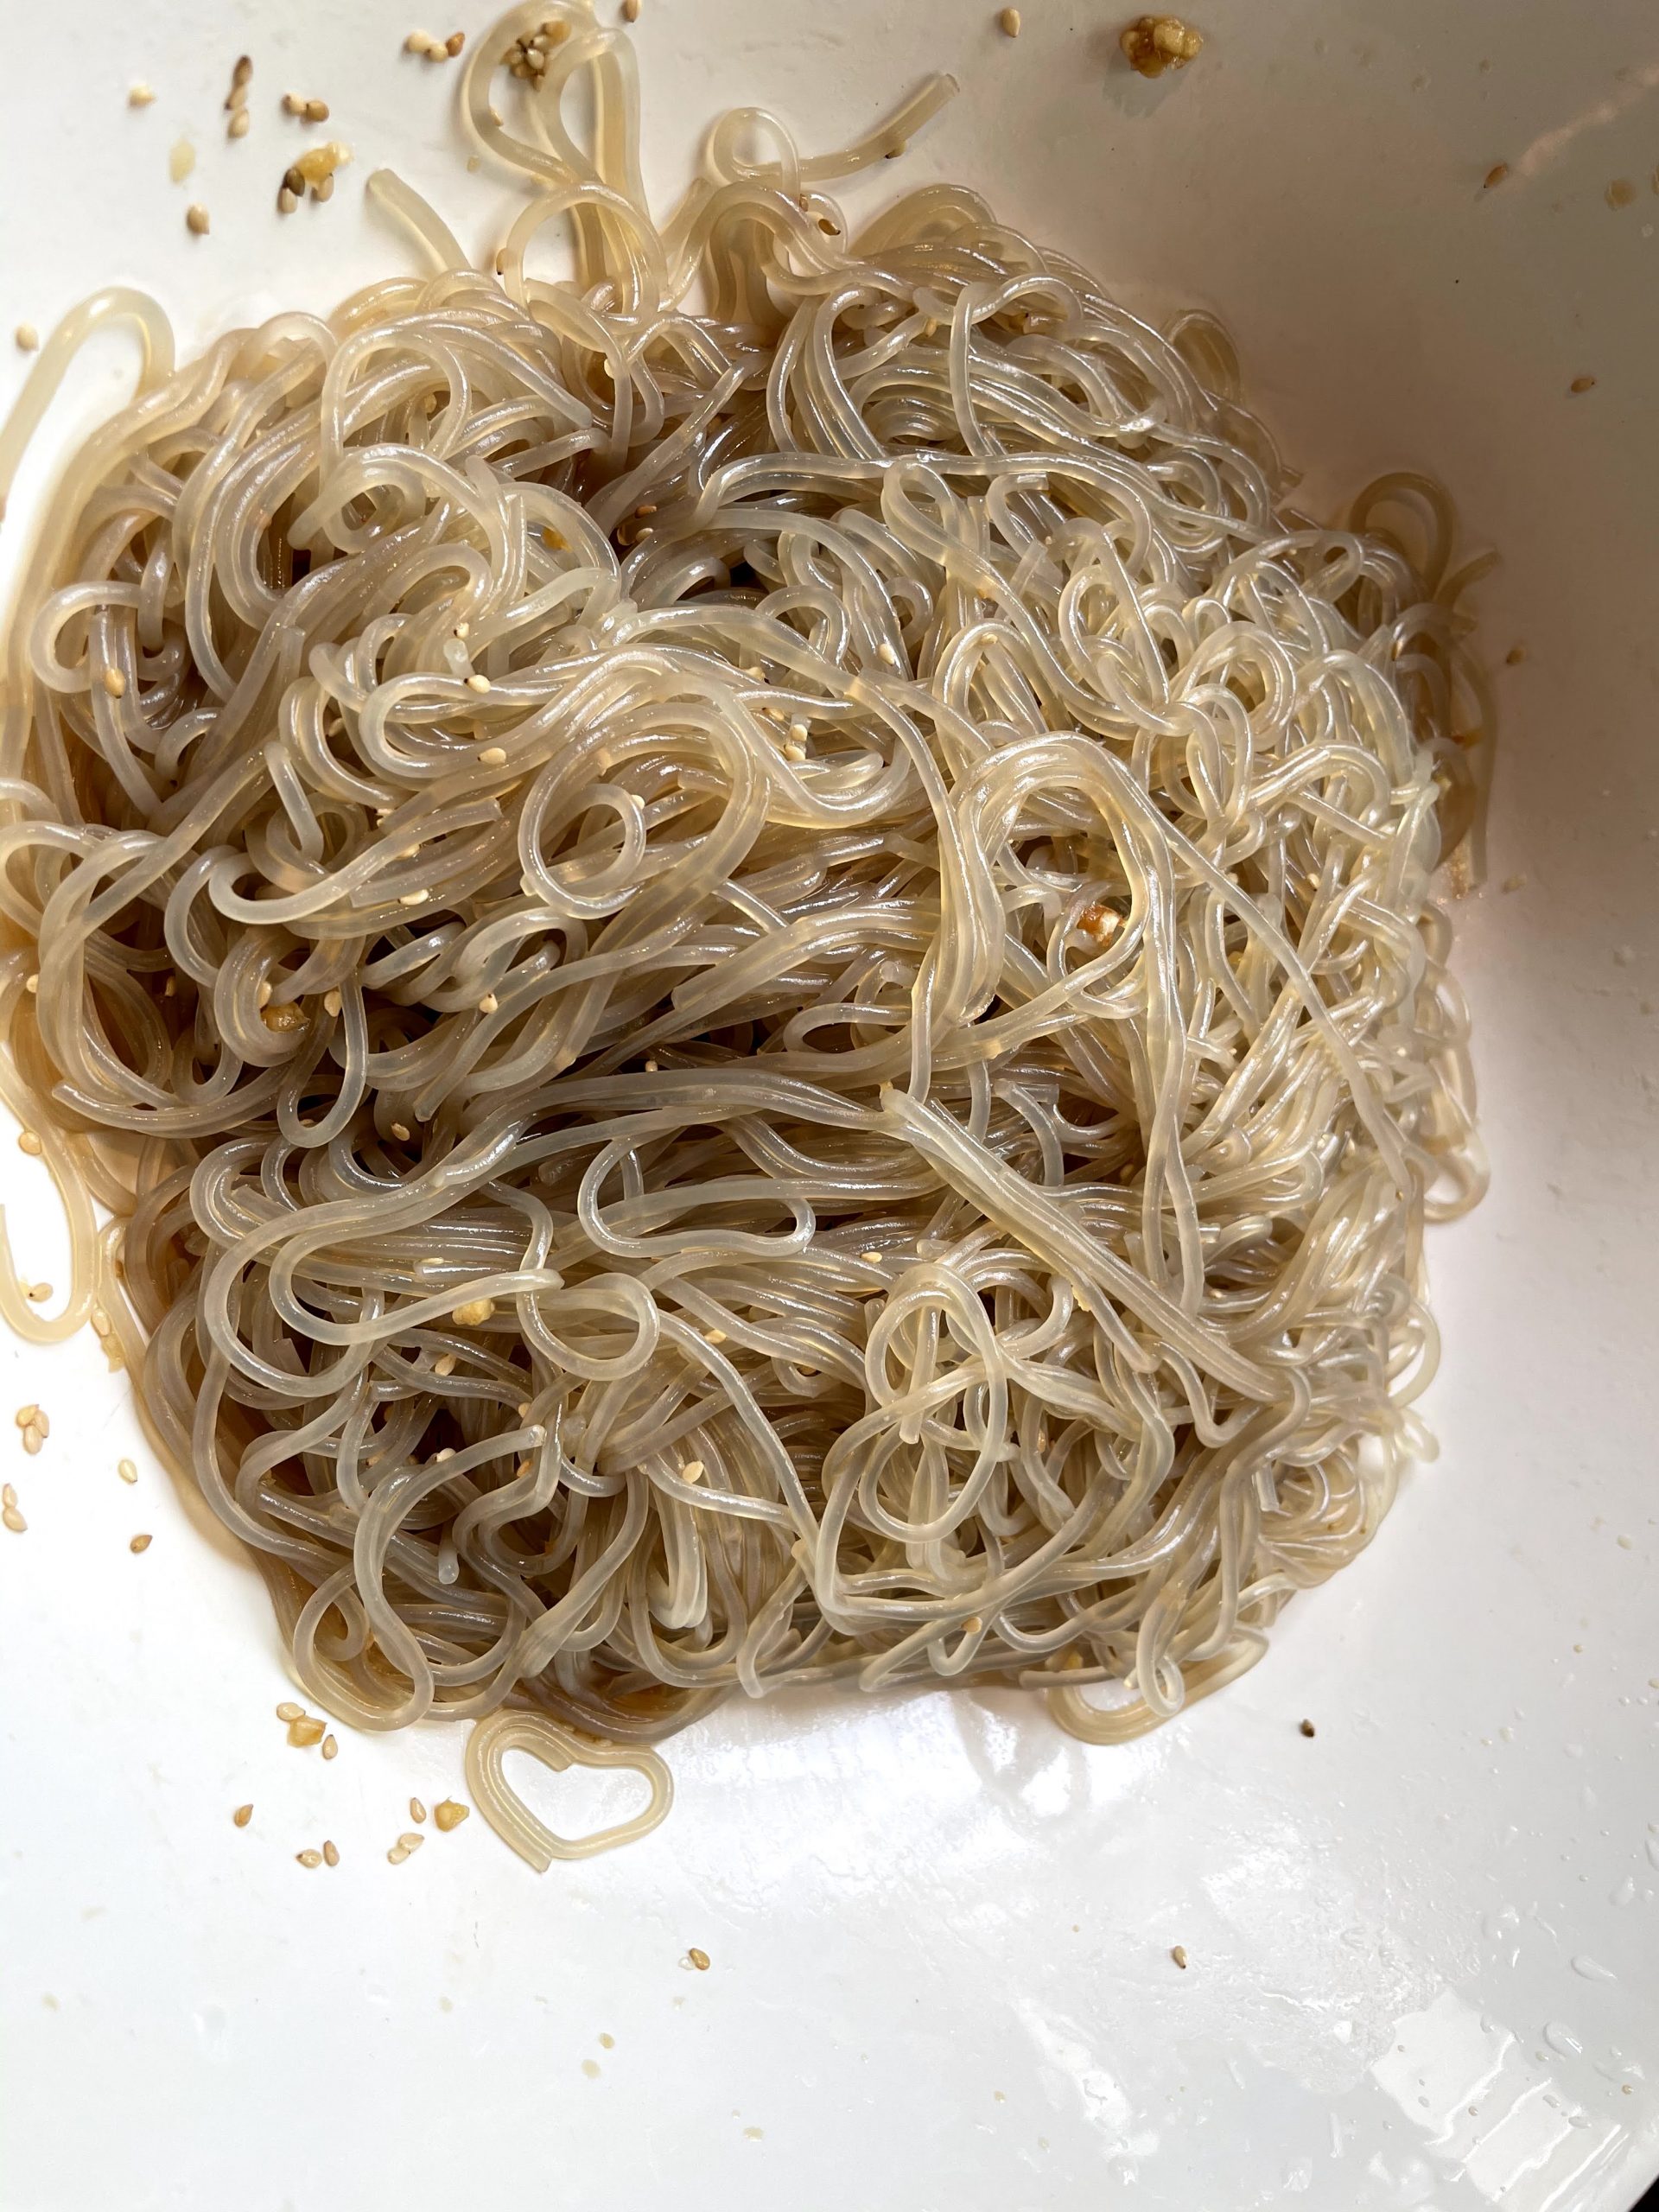 Japchae noodles marinating in sauce.